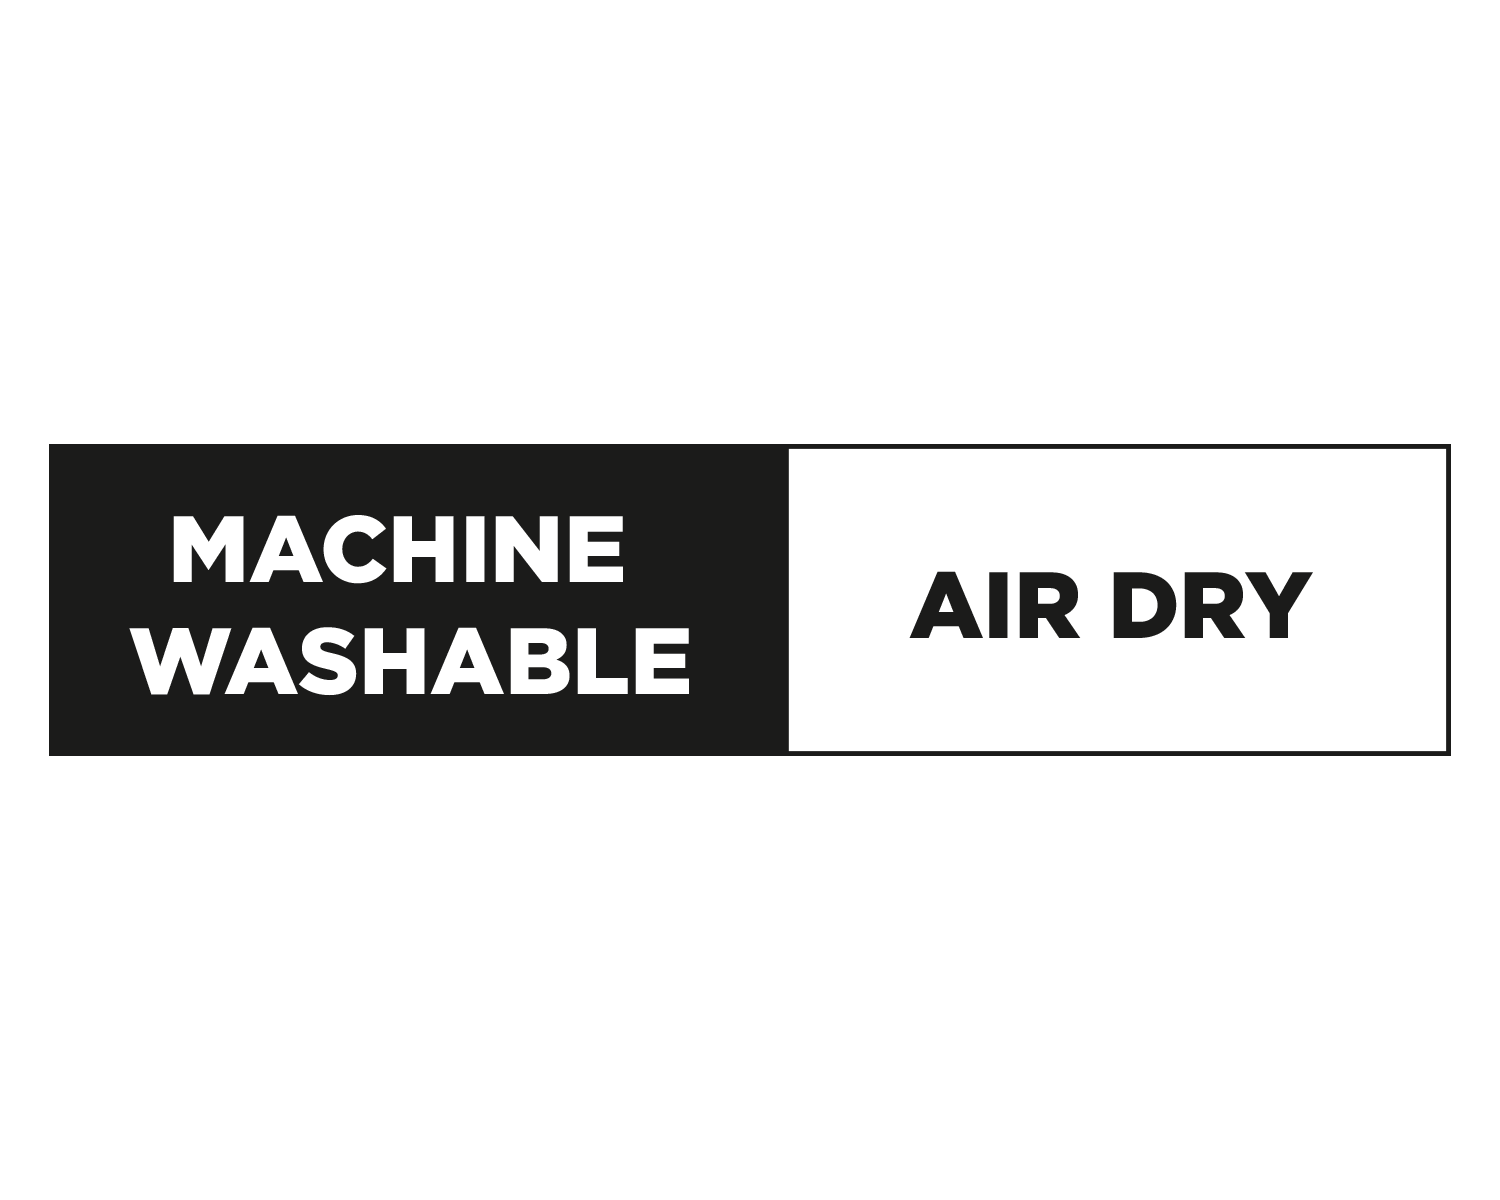 Machine washable - air dry